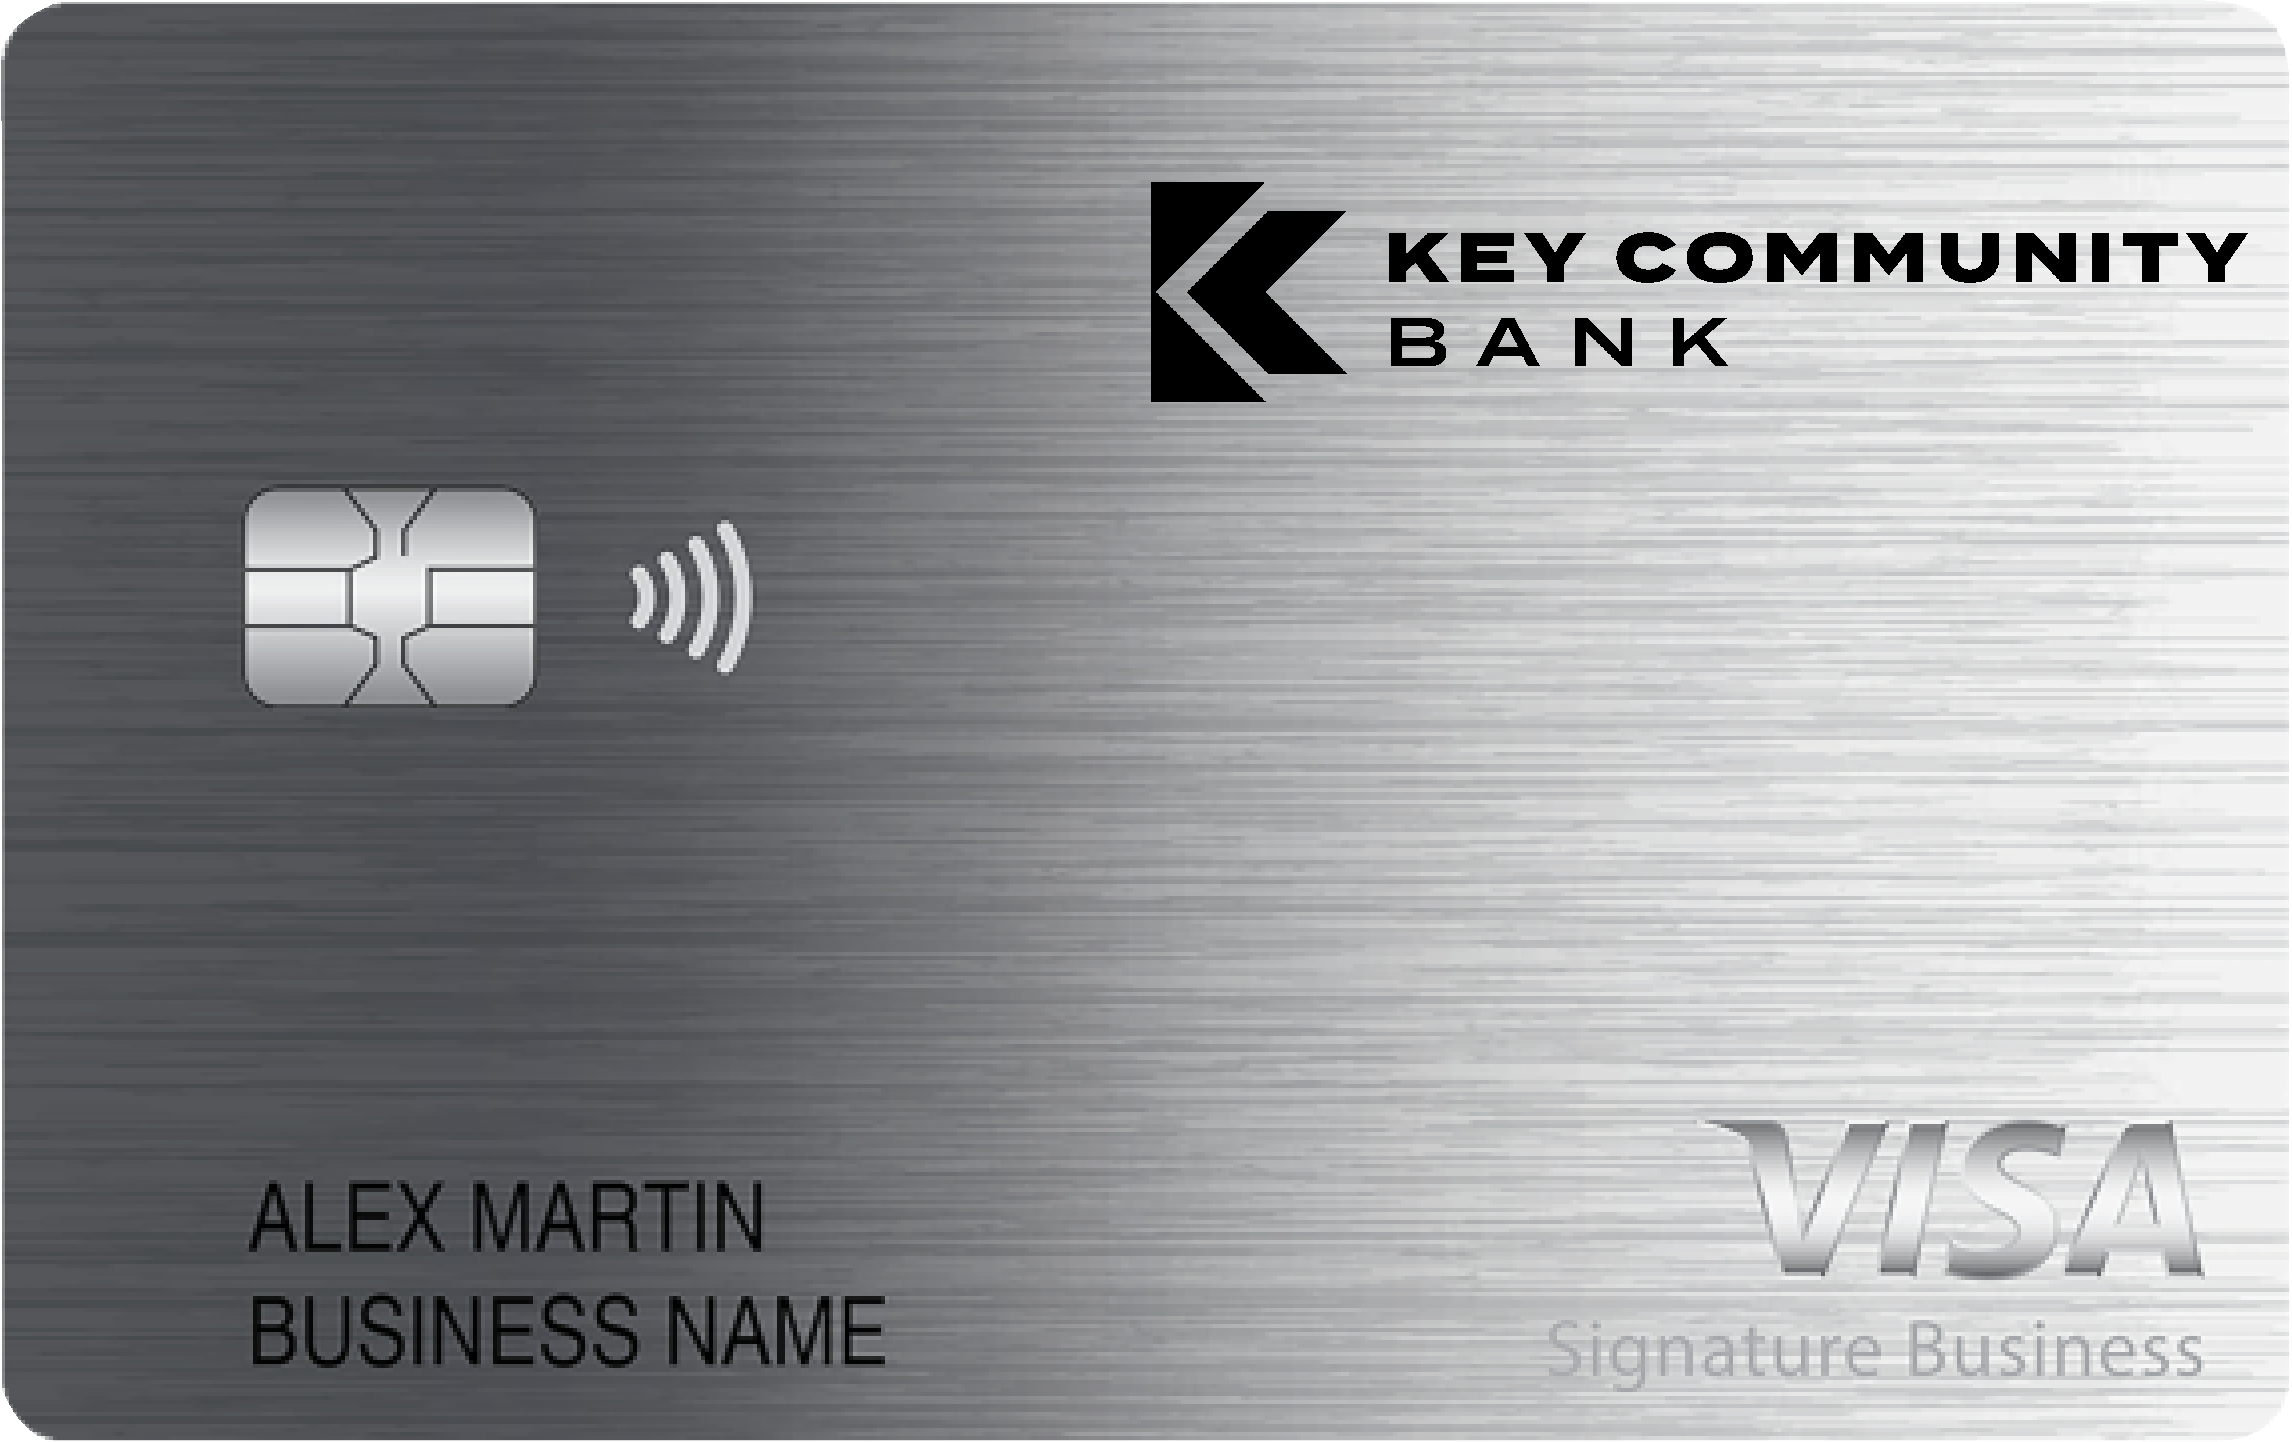 Key Community Bank Smart Business Rewards Card